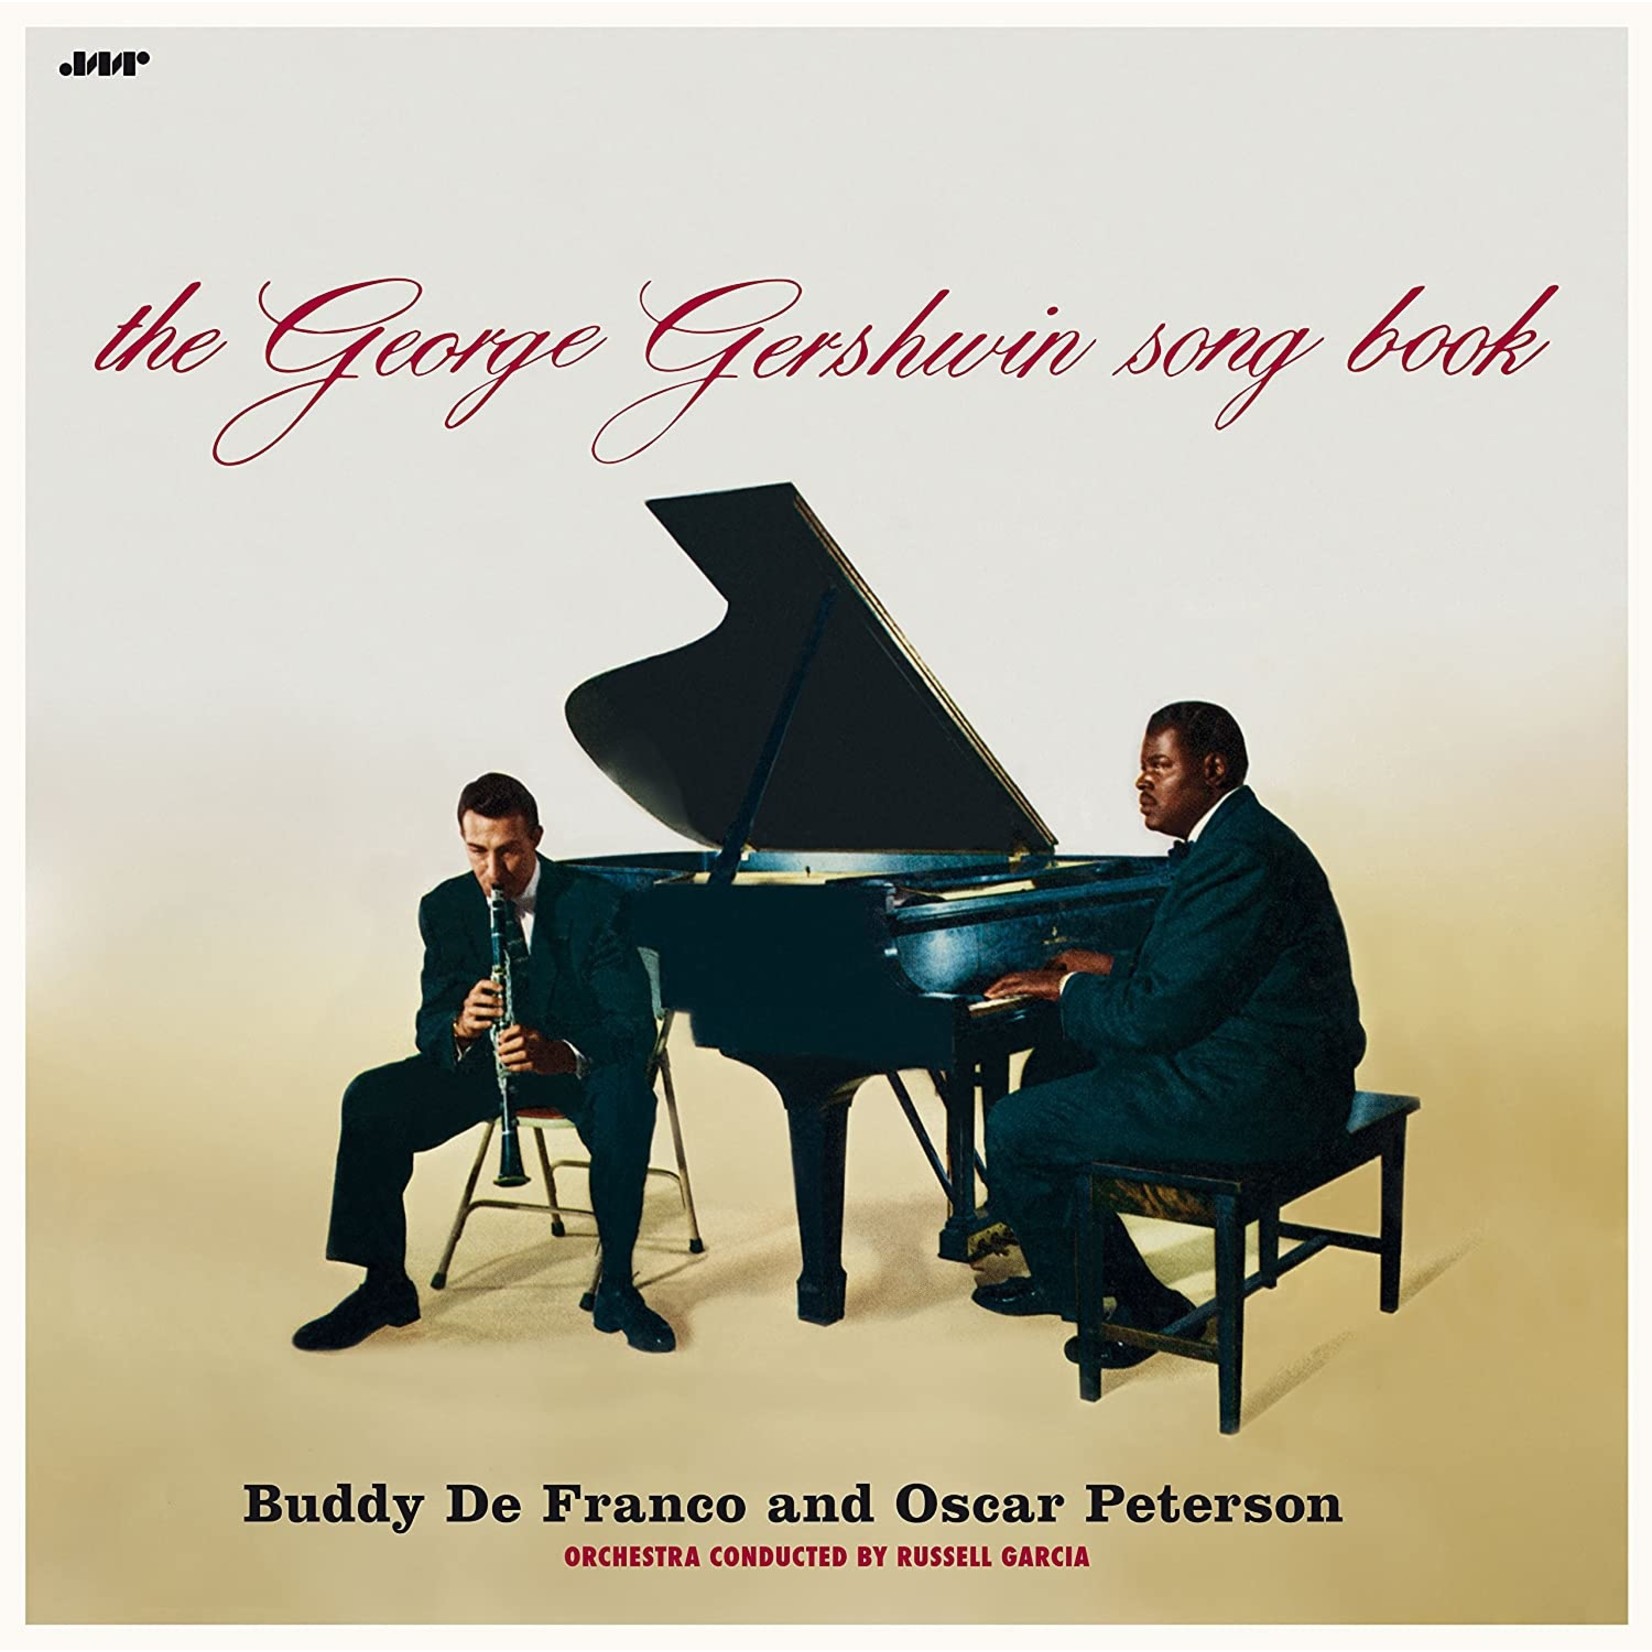 Buddy DeFranco, Oscar Peterson - The George Gershwin Songbook (Jazz Wax) (Ltd.) (180g) (High-Def VV) (Remastered)